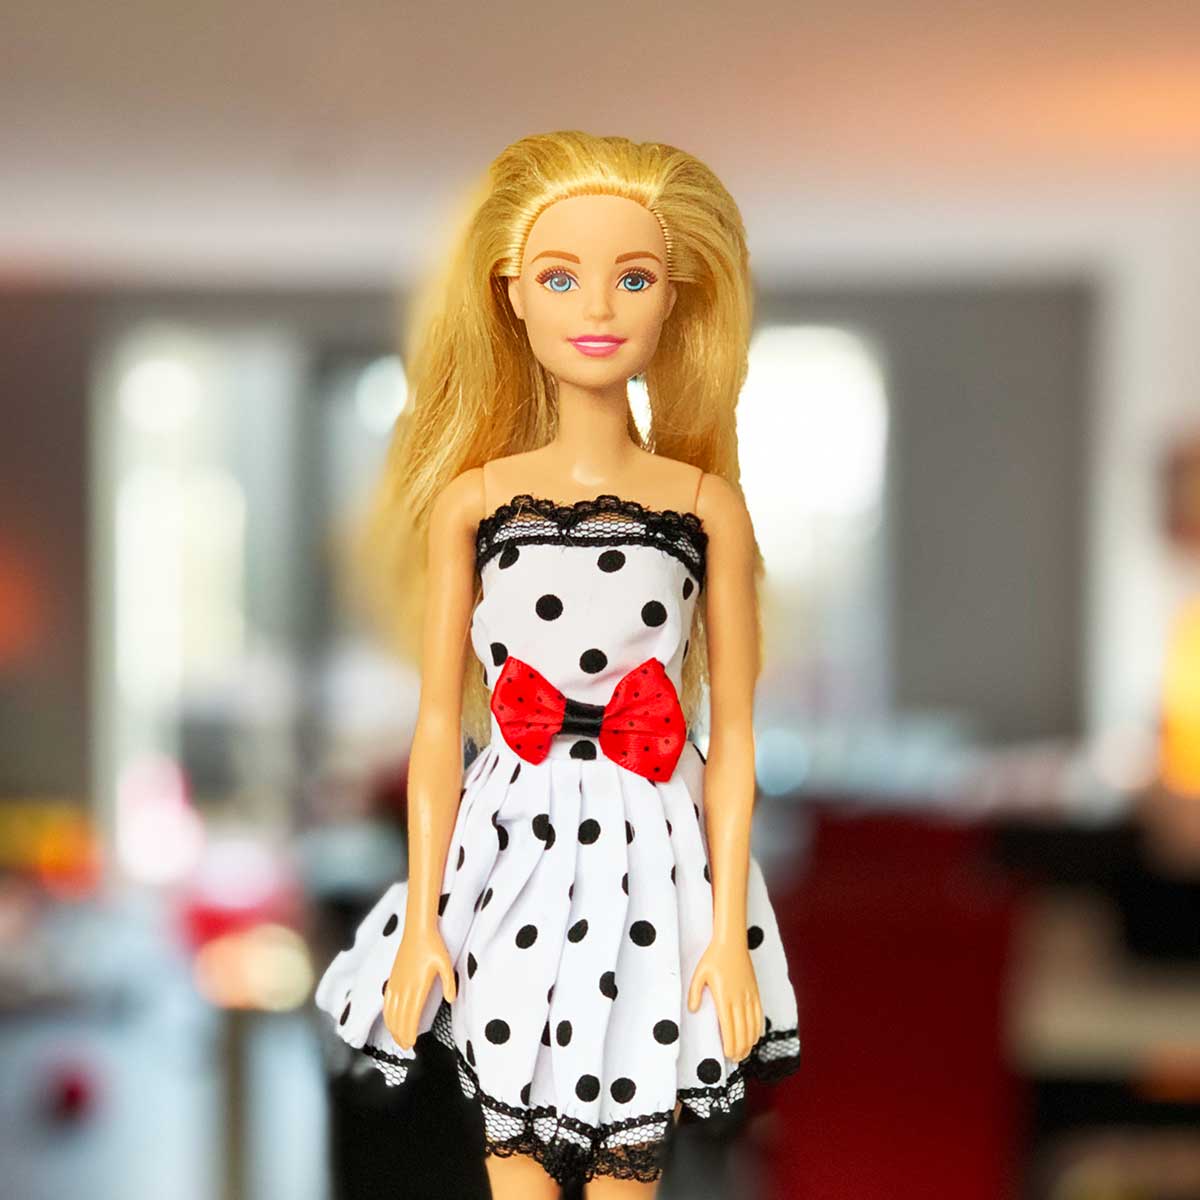 Barbie jurk wit met zwarte stippen kant randje en rode strik